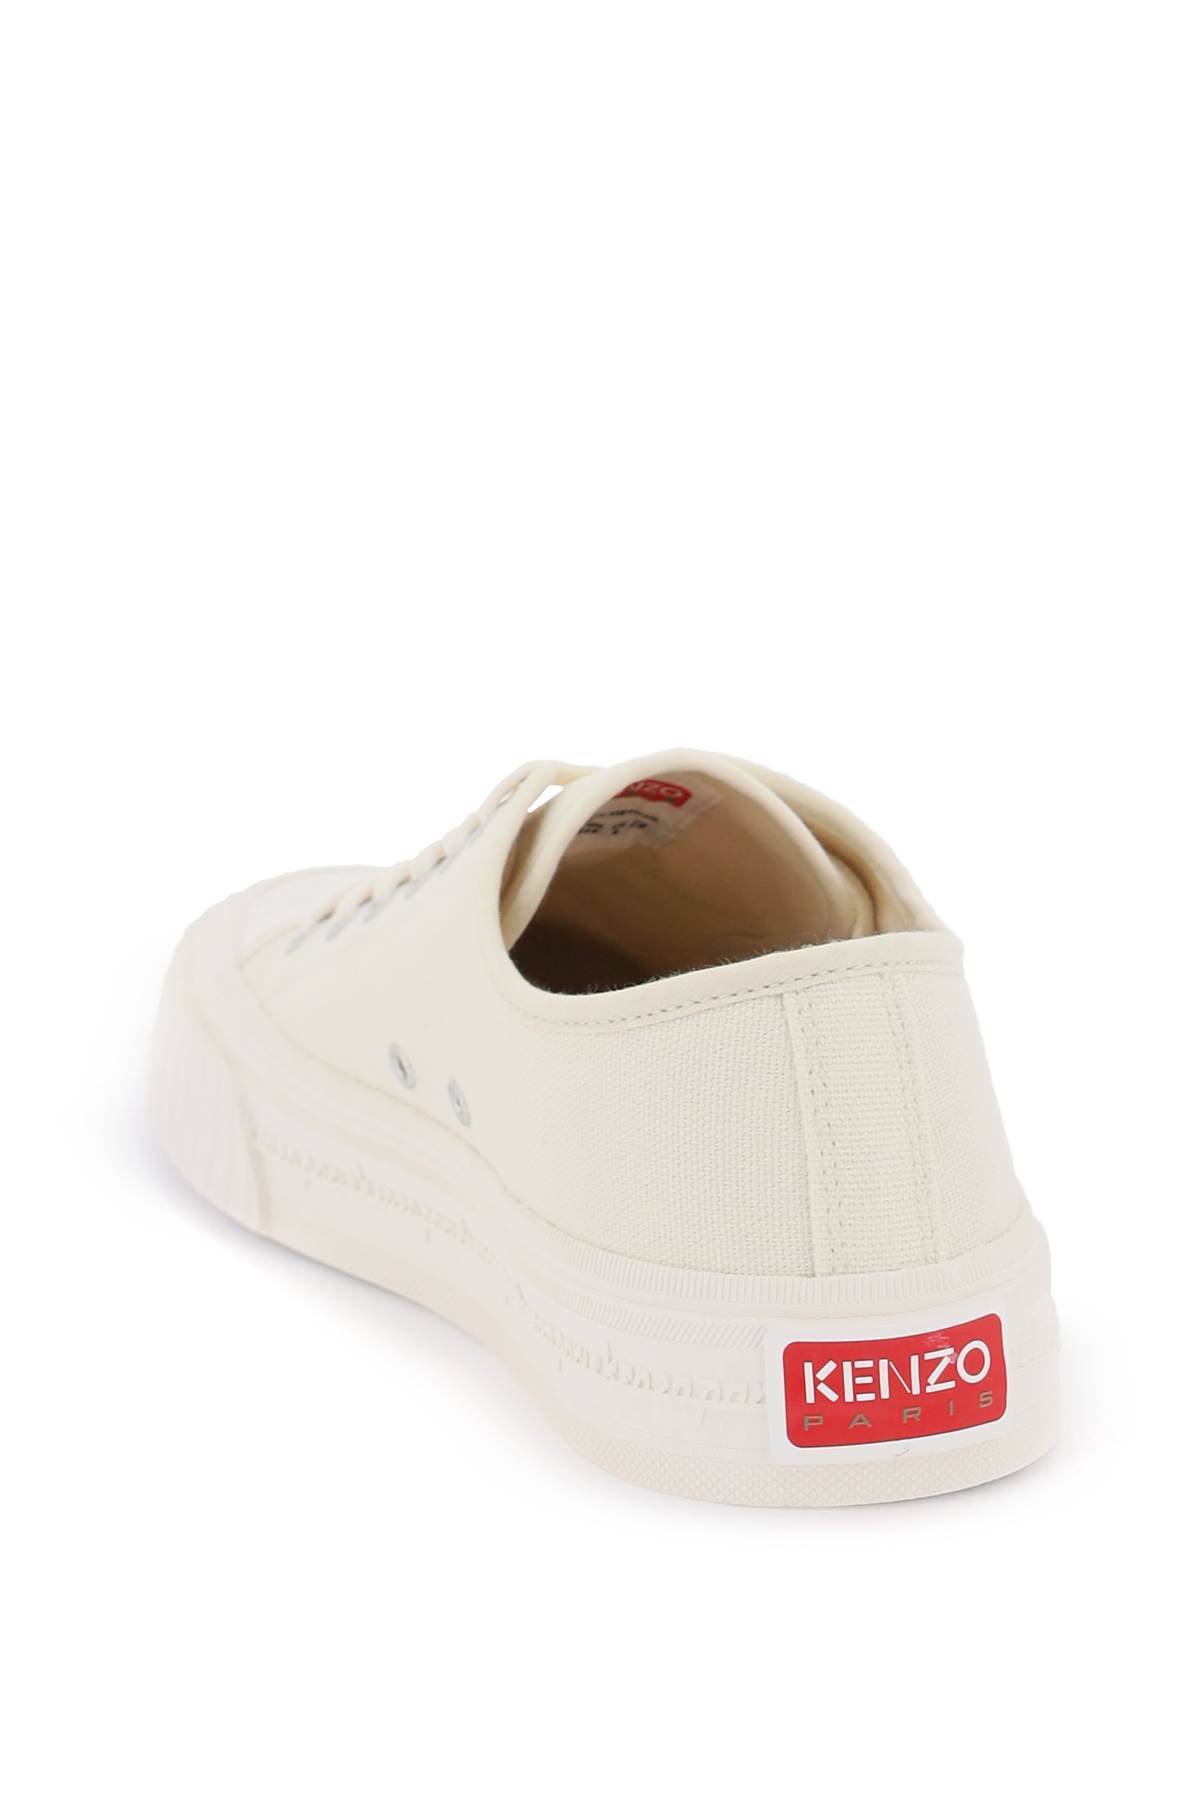 Shop Kenzo Canvas School Sneakers In White